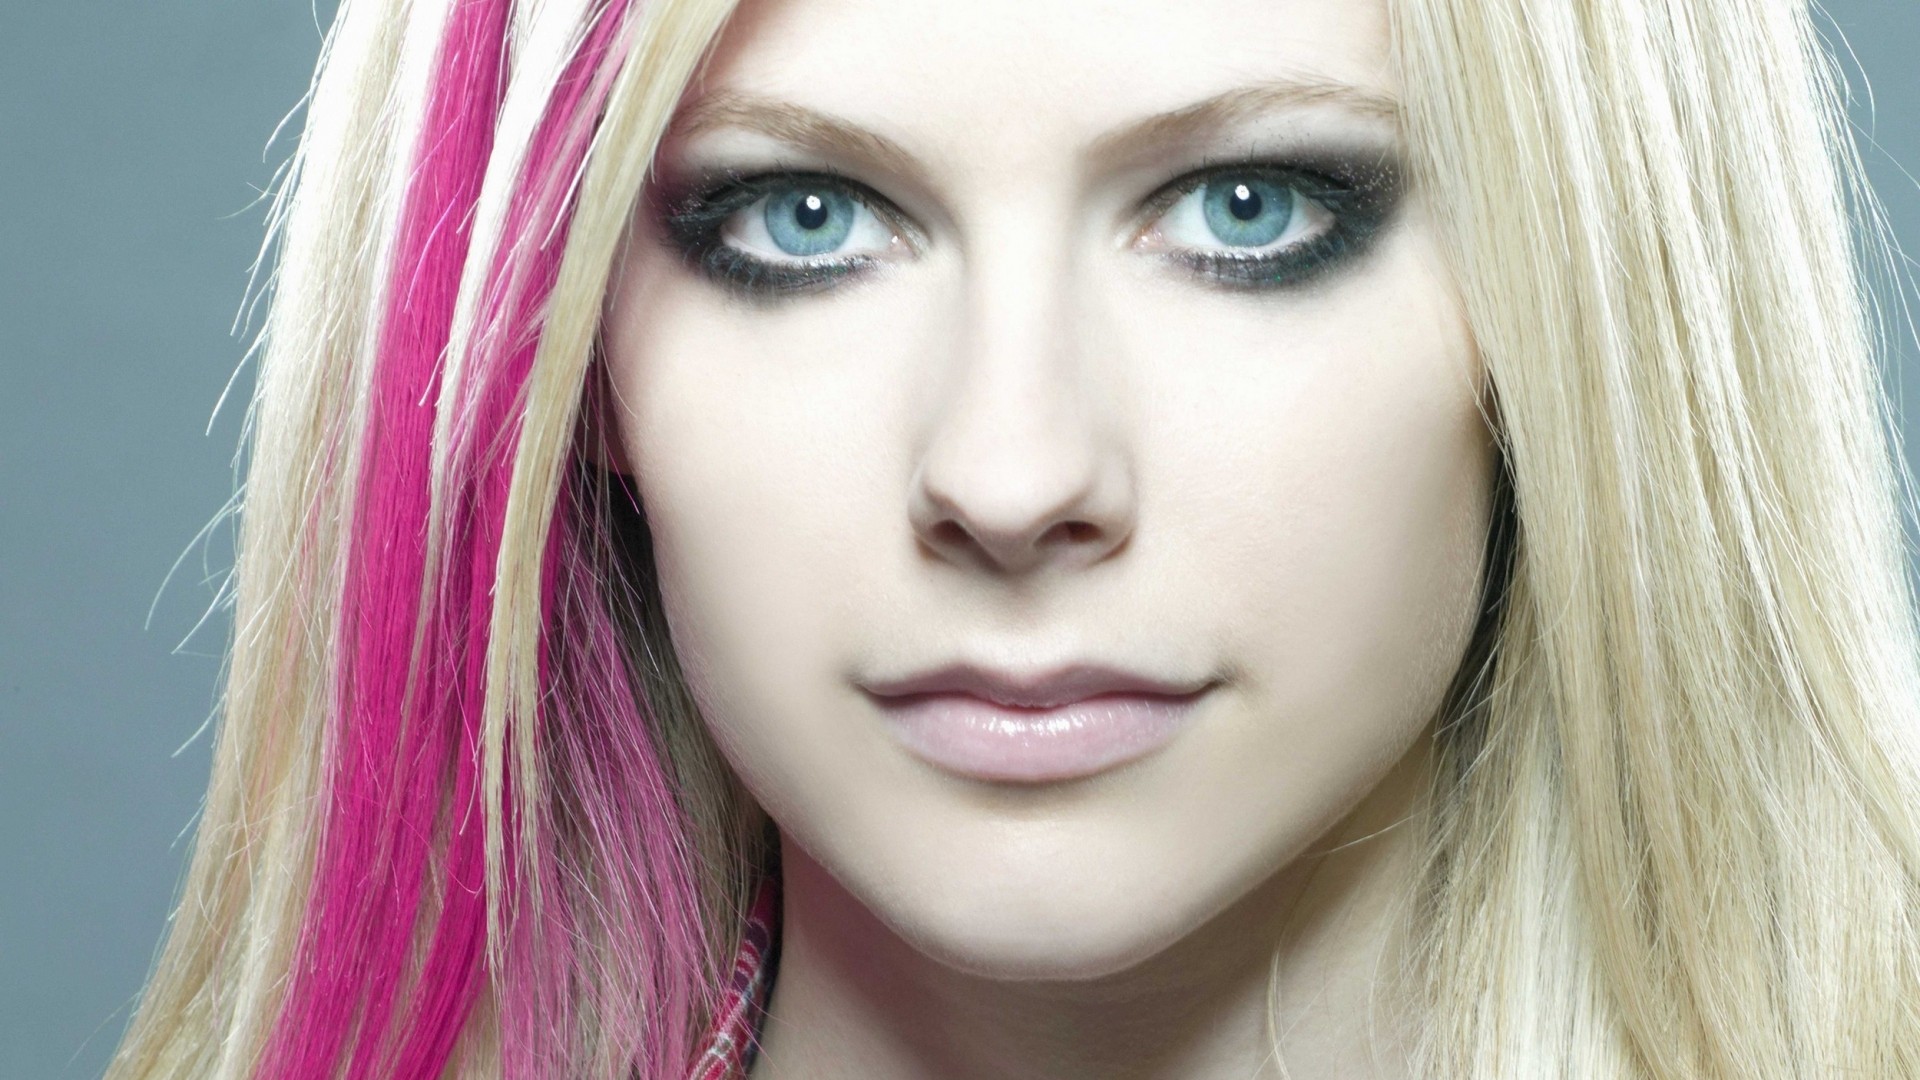 People 1920x1080 Avril Lavigne face makeup women blonde portrait singer celebrity closeup blue eyes looking at viewer simple background